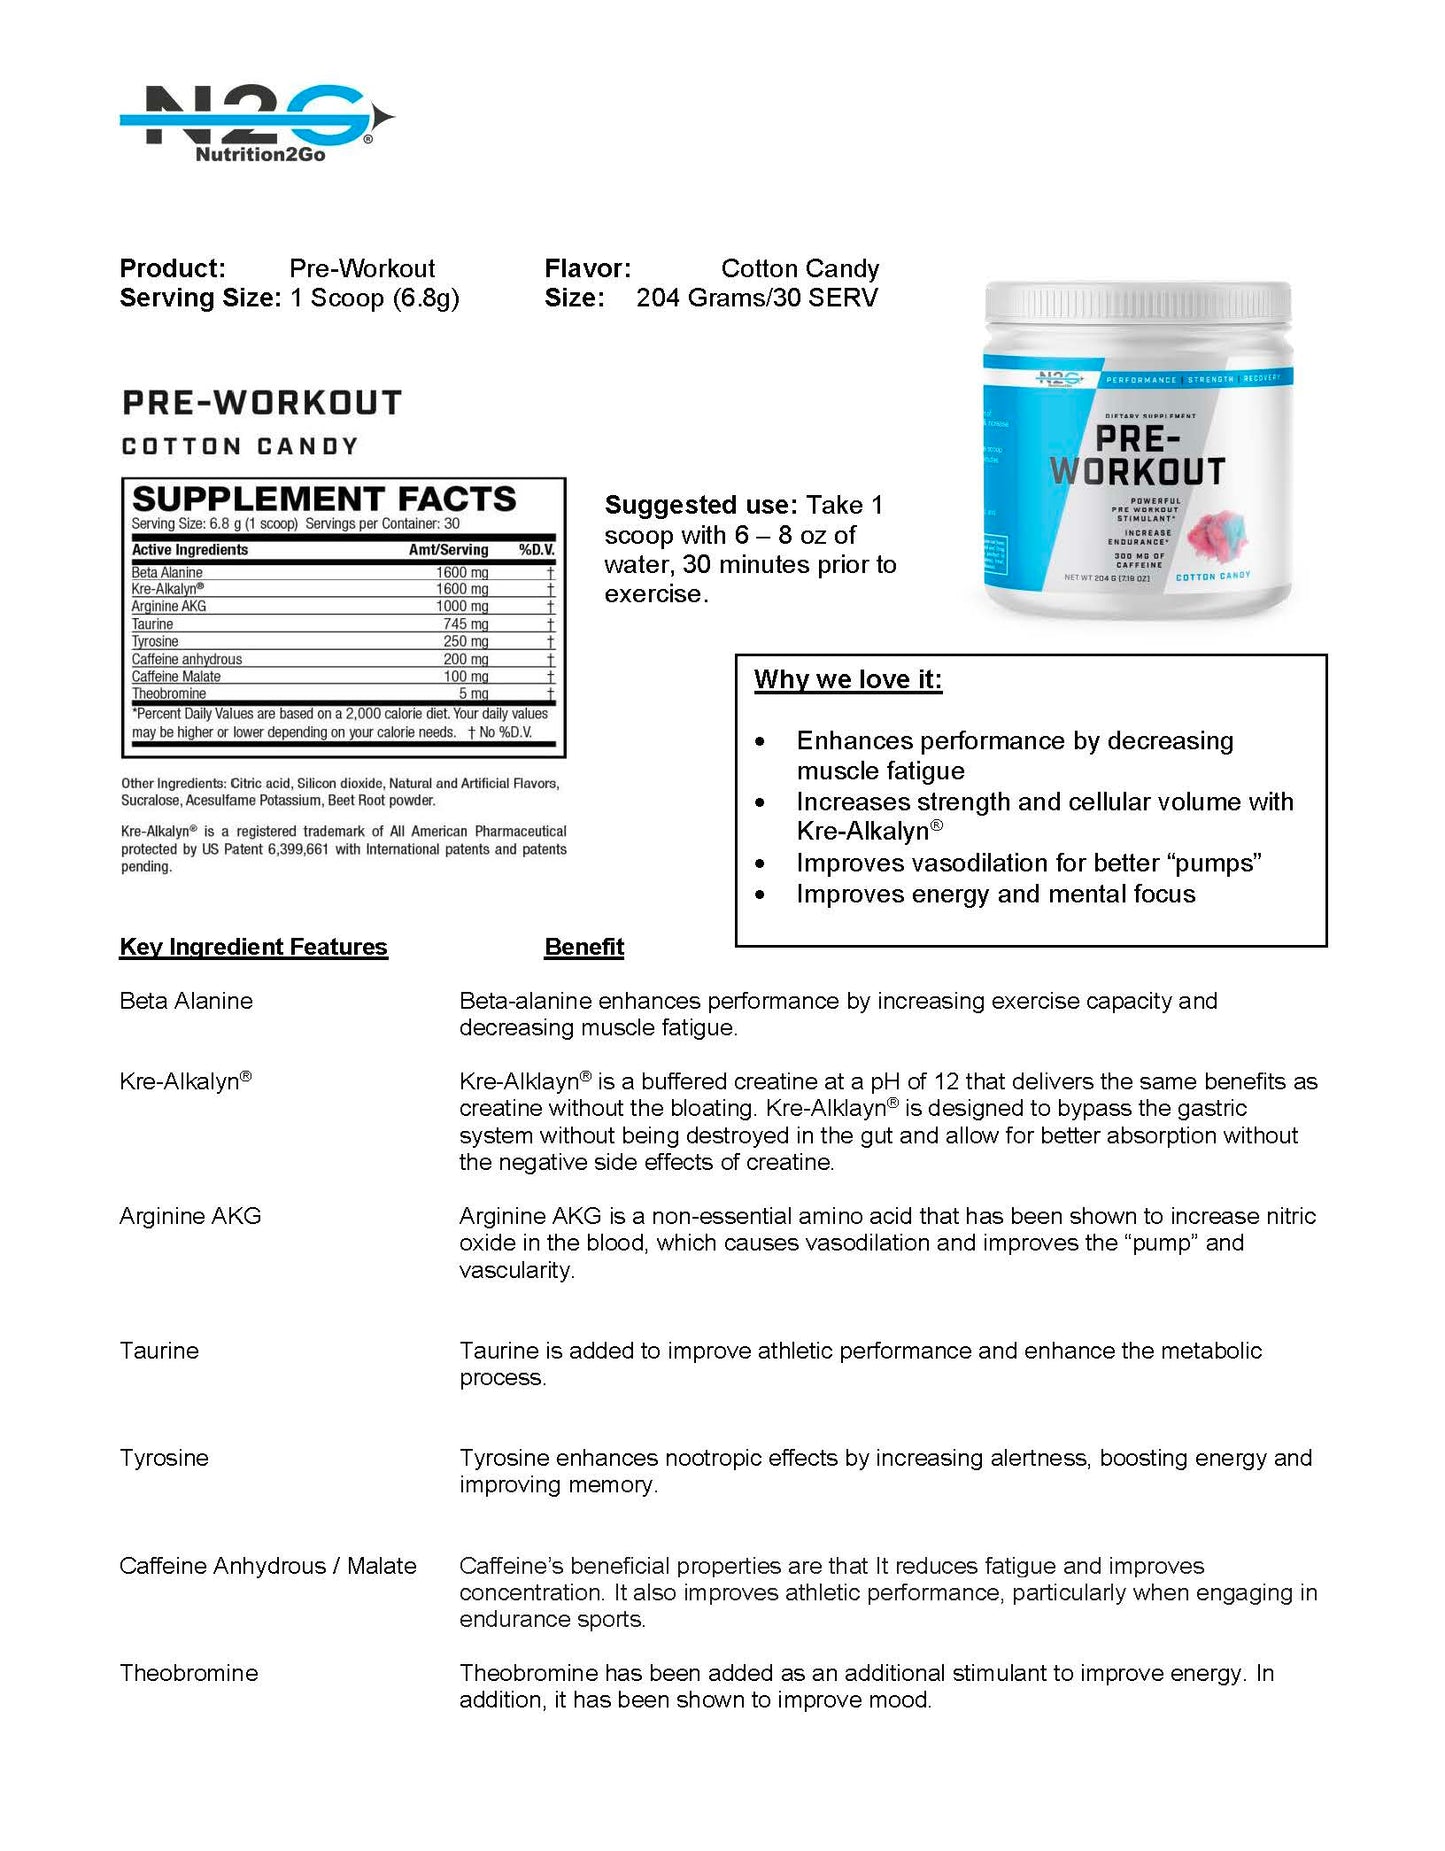 N2G Cotton Candy Pre-Workout Fact Sheet